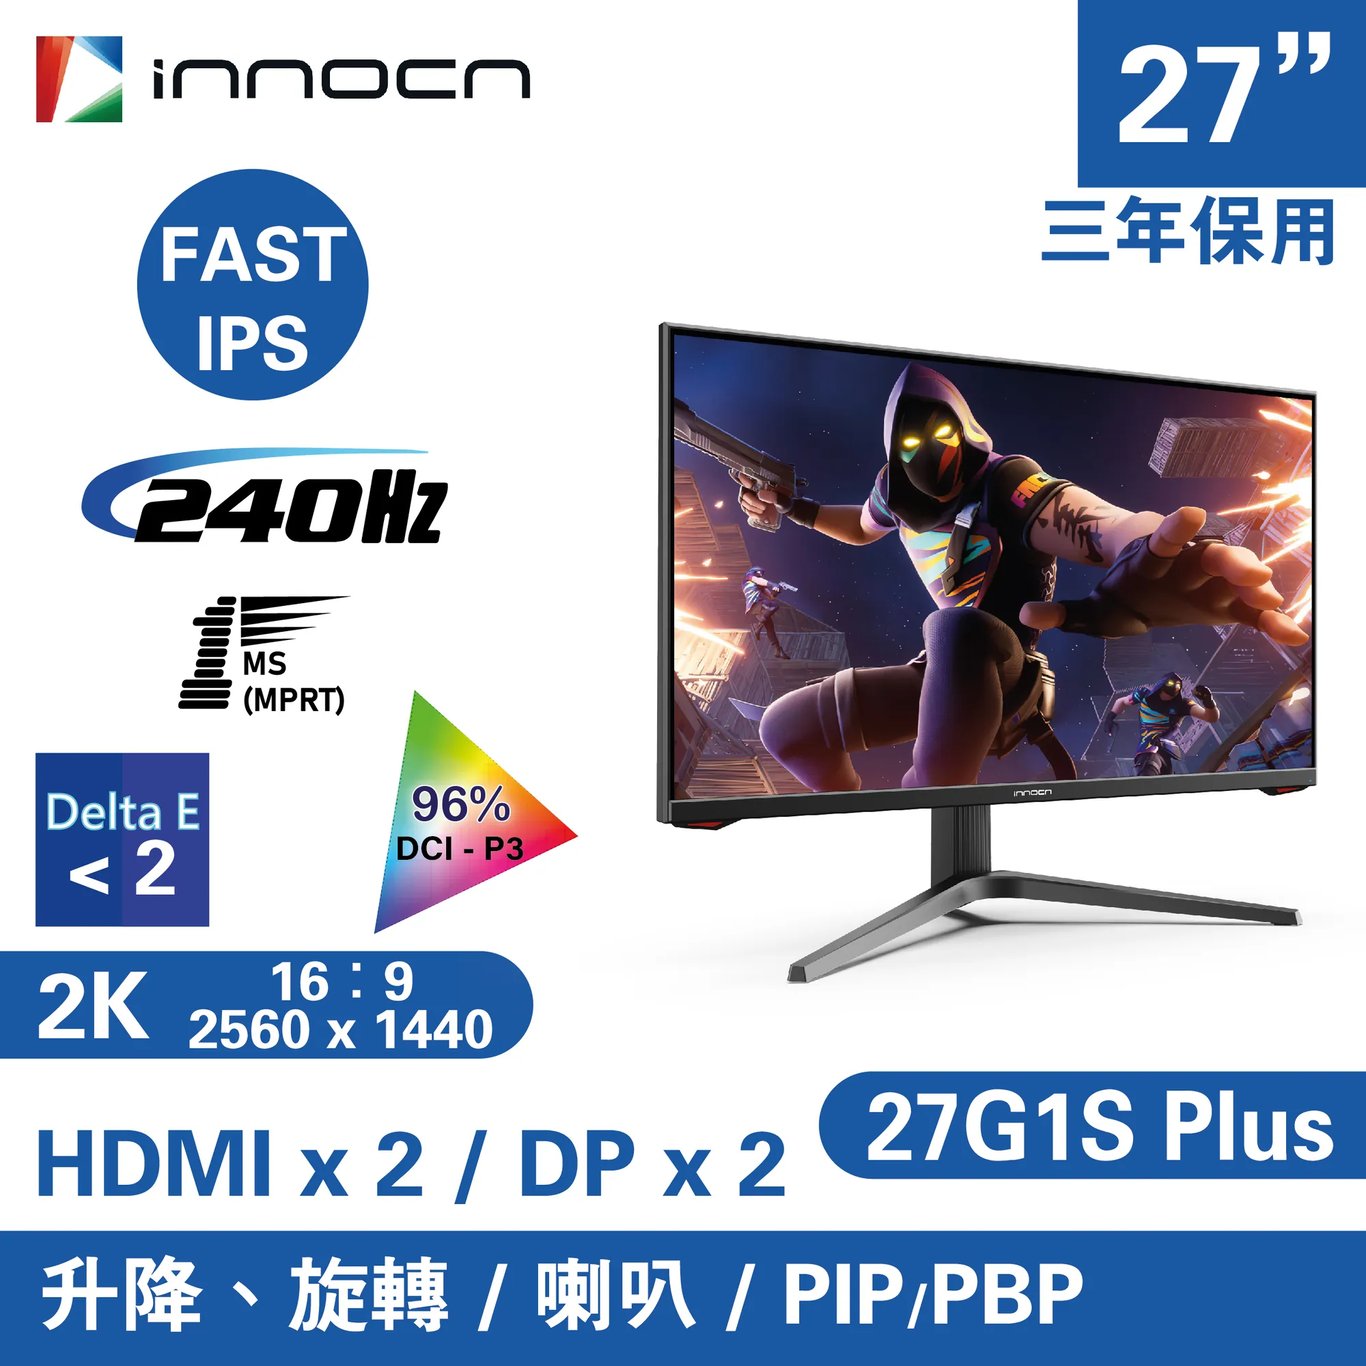 INNOCN 27G1S Plus 電競顯示器 (27吋 / WQHD / 240Hz / Fast IPS / FreeSync / G-Sync Compatible / HDMI 2.1) - 2560 x 1440